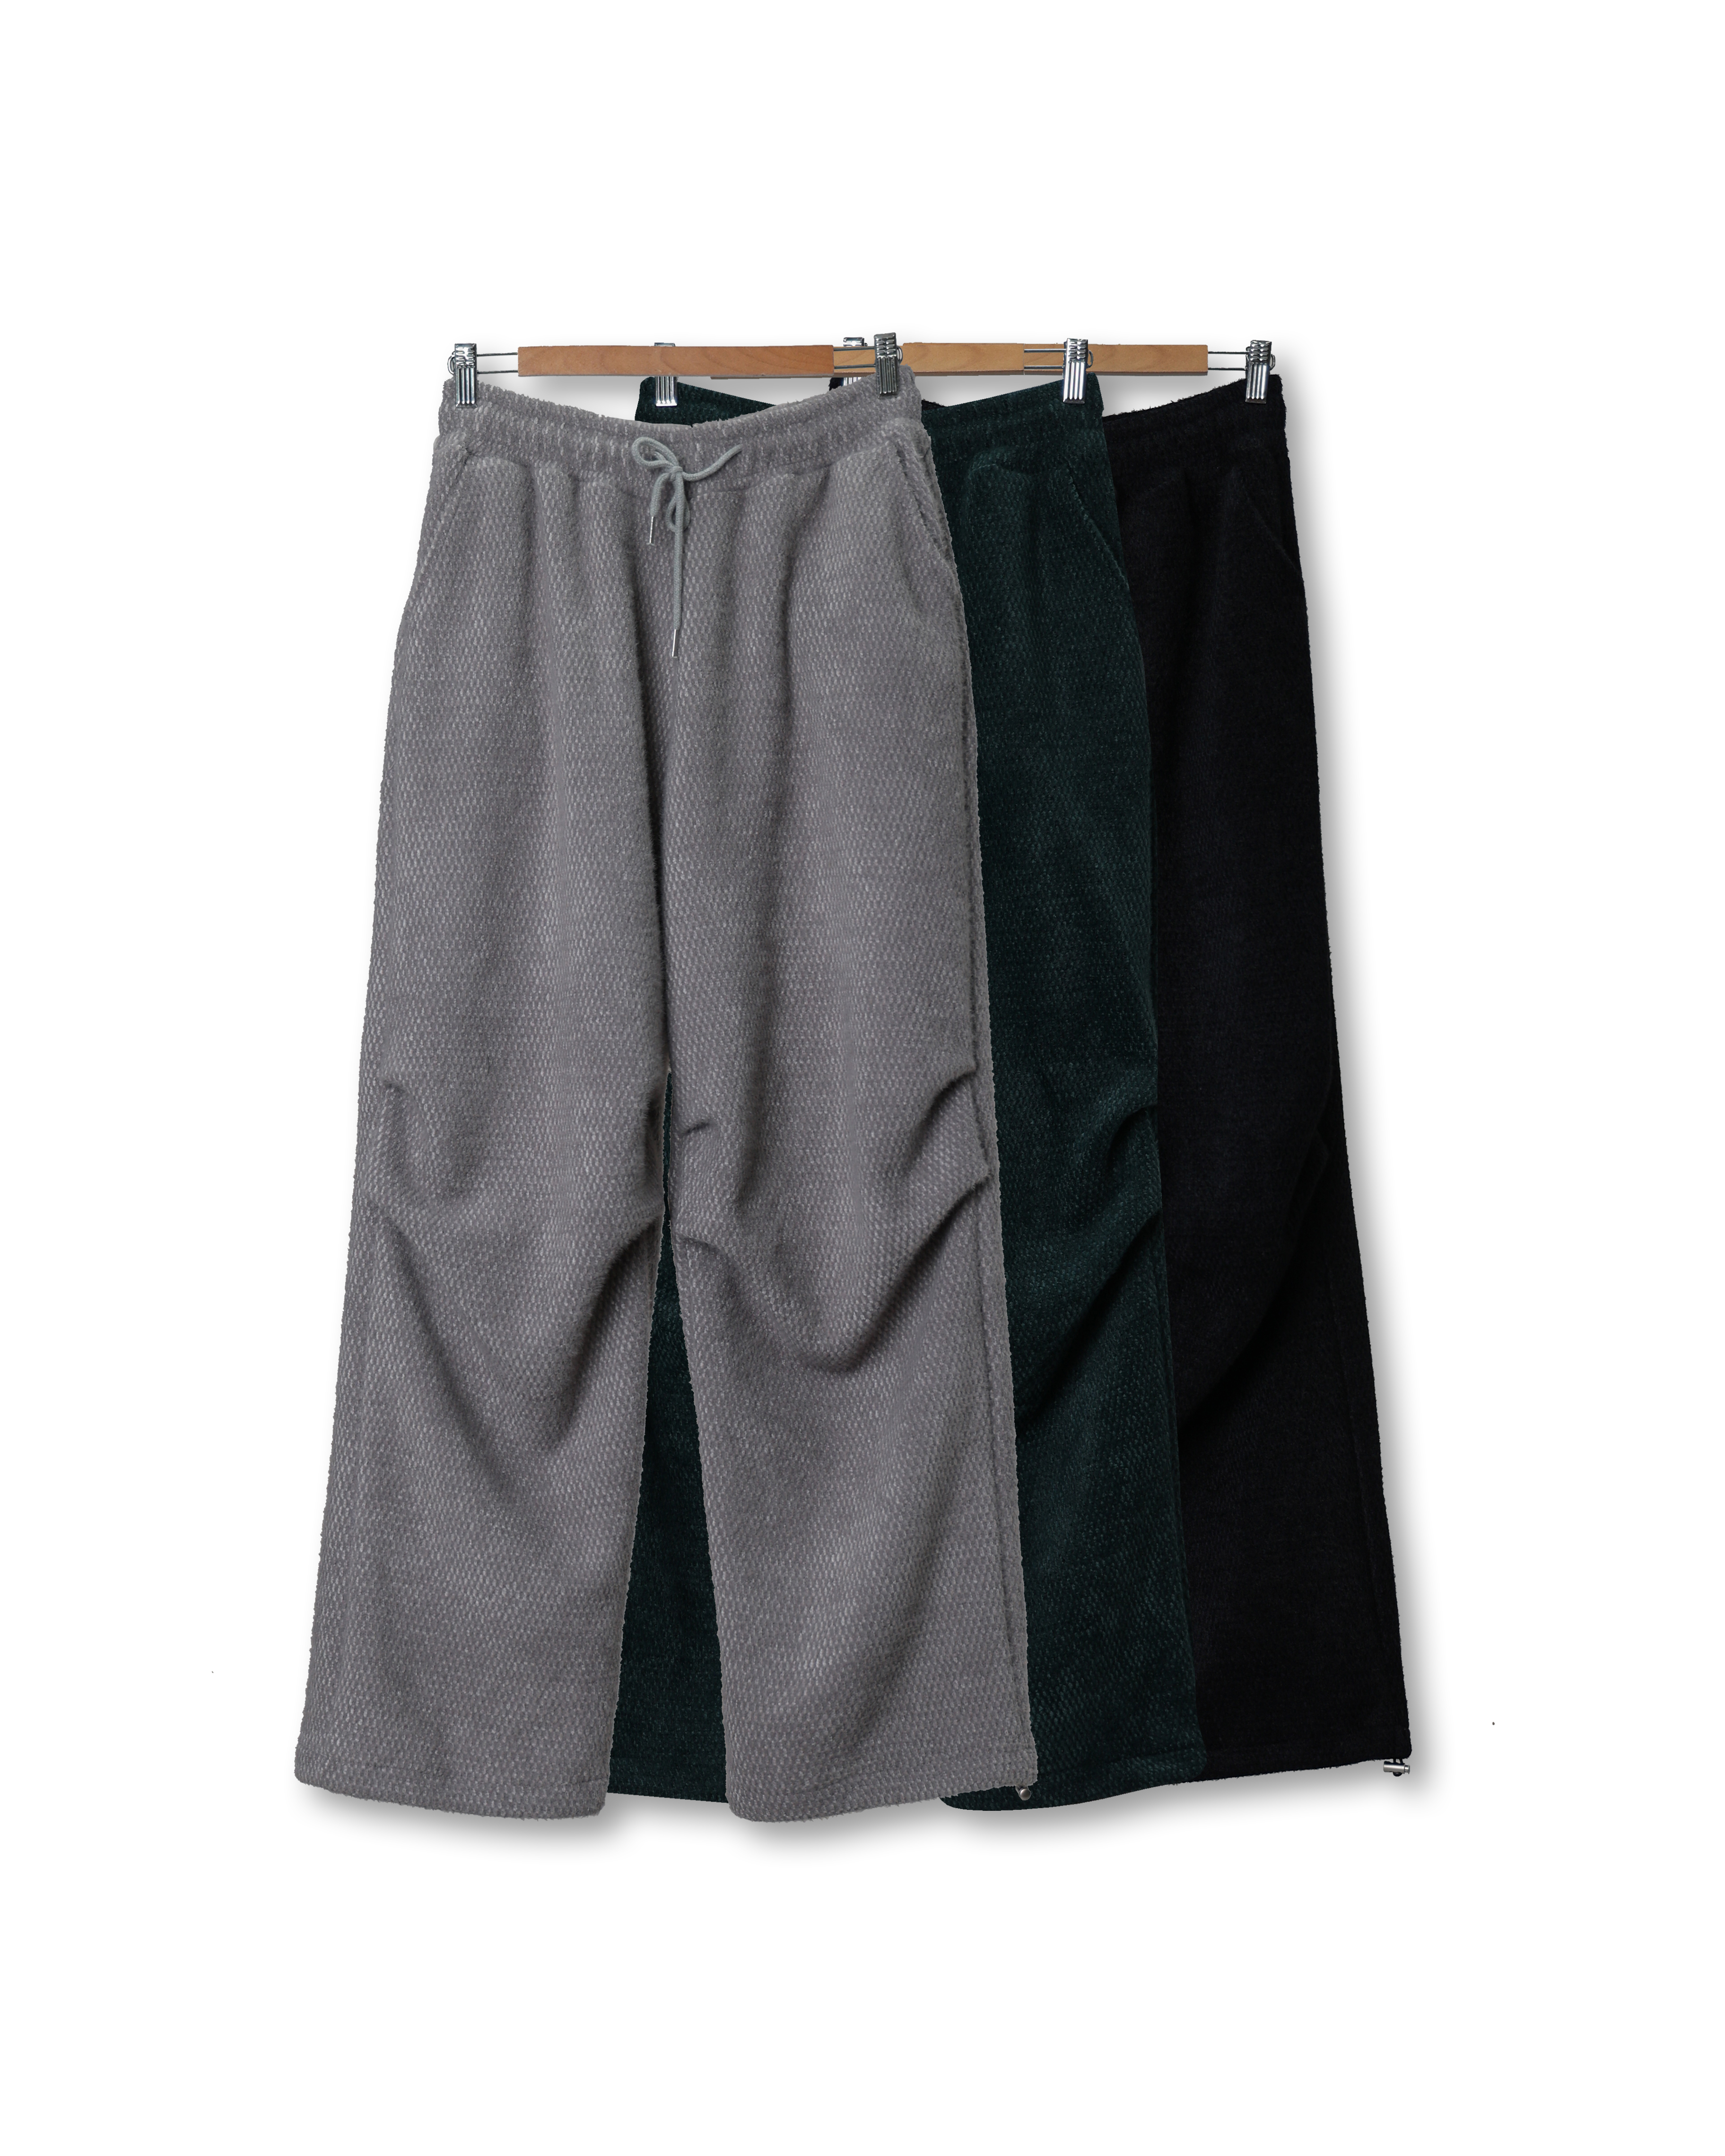 FORT Jacquard Pleats Knit Wide Pants (Black/Gray/Deep Green)